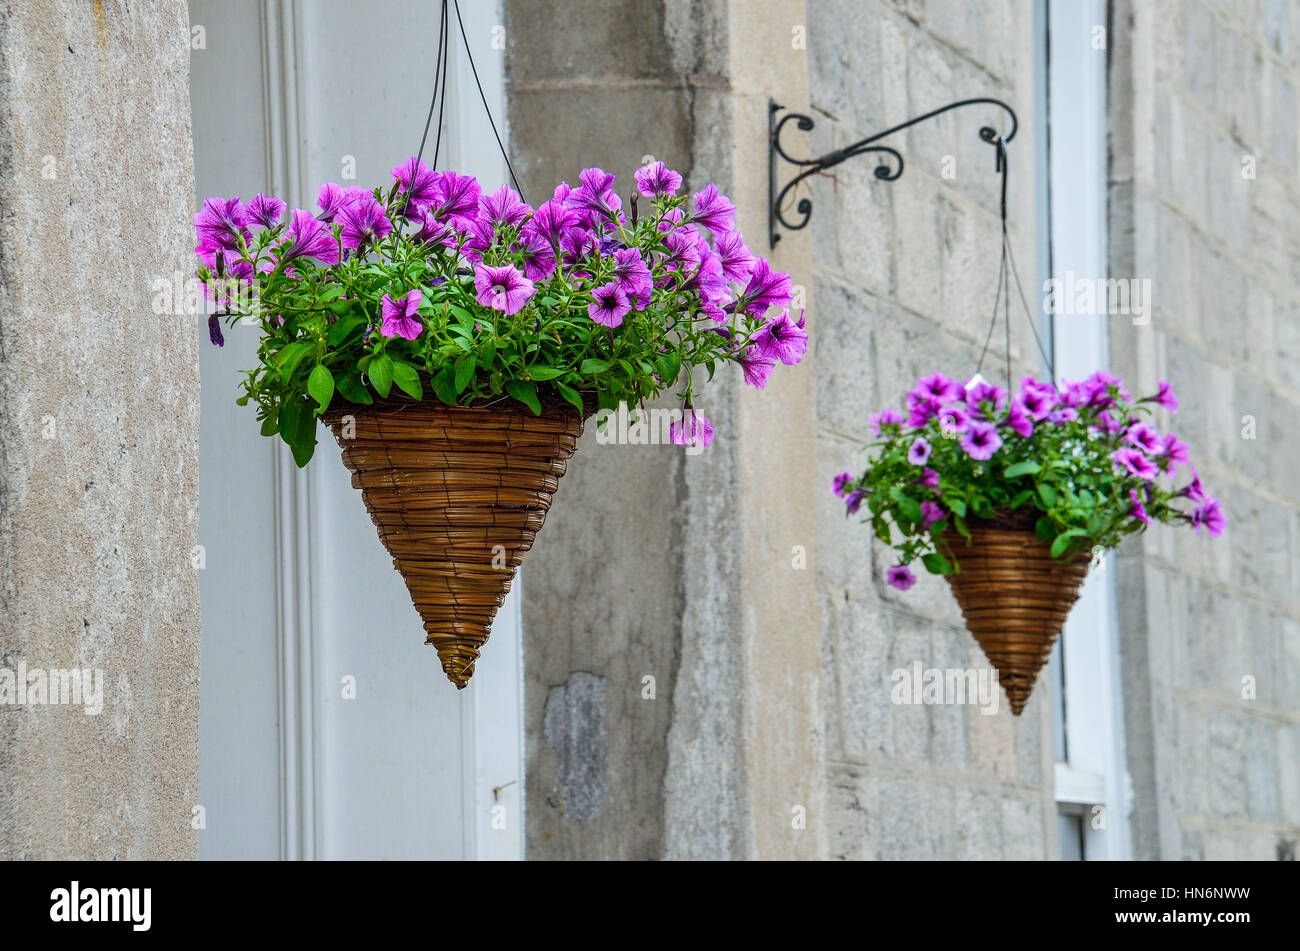 Hanging purple flower pots cones in urban area Stock Photo